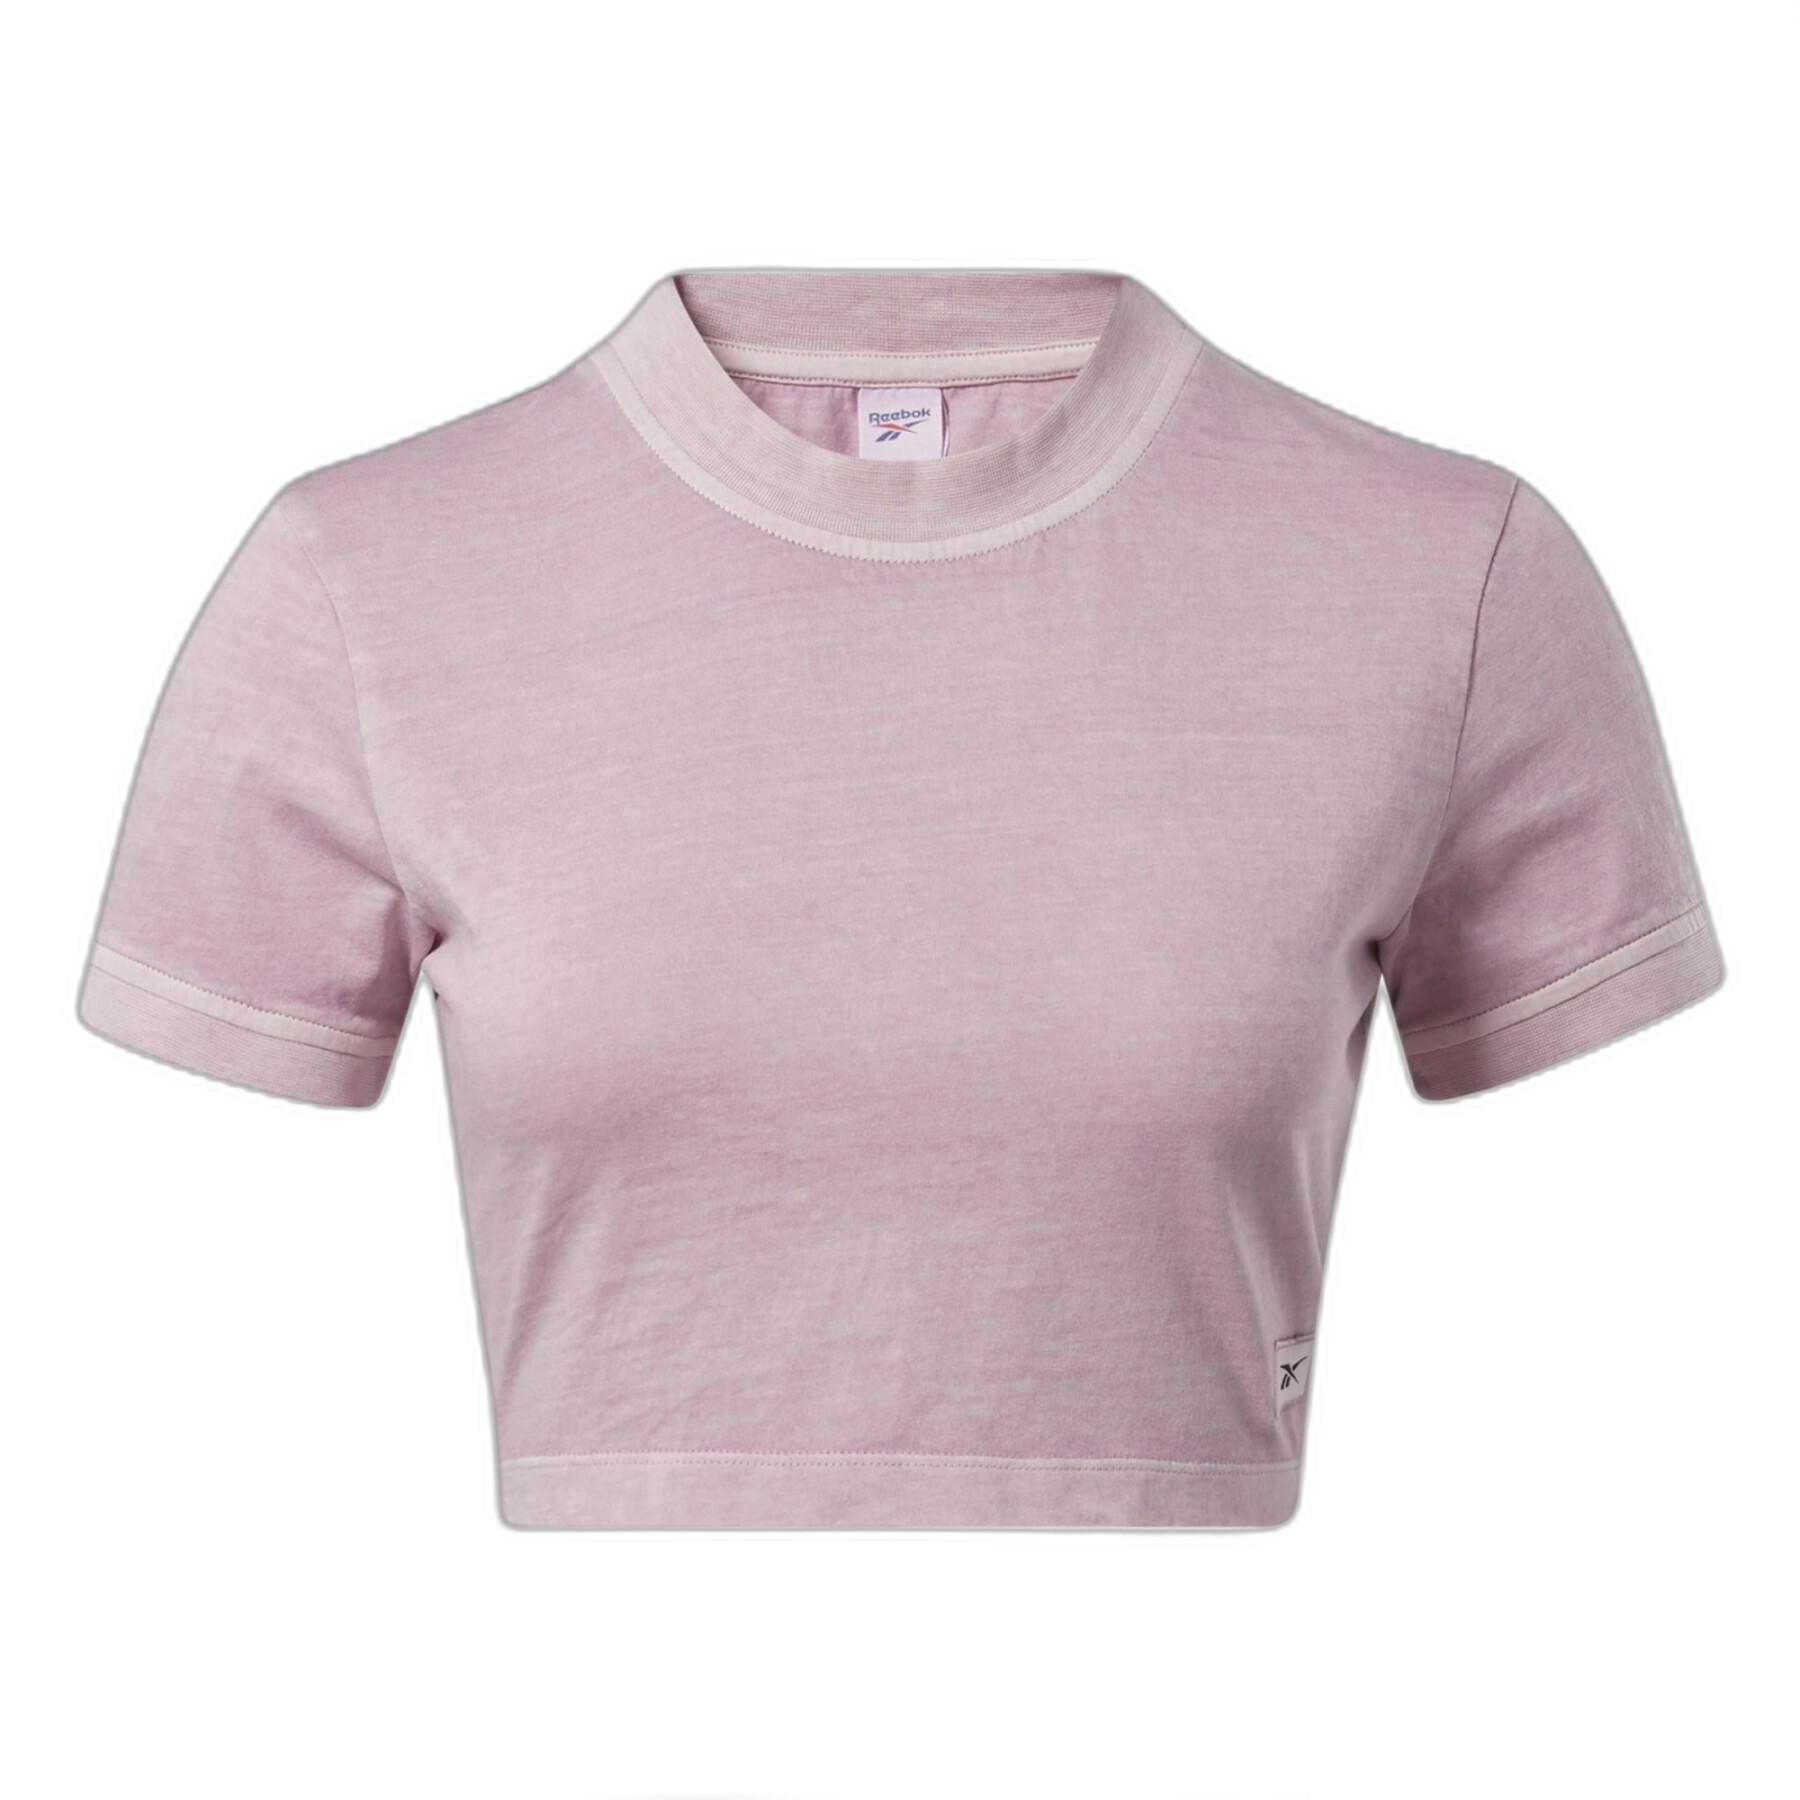 Women's natural dye fitted t-shirt Reebok Classics